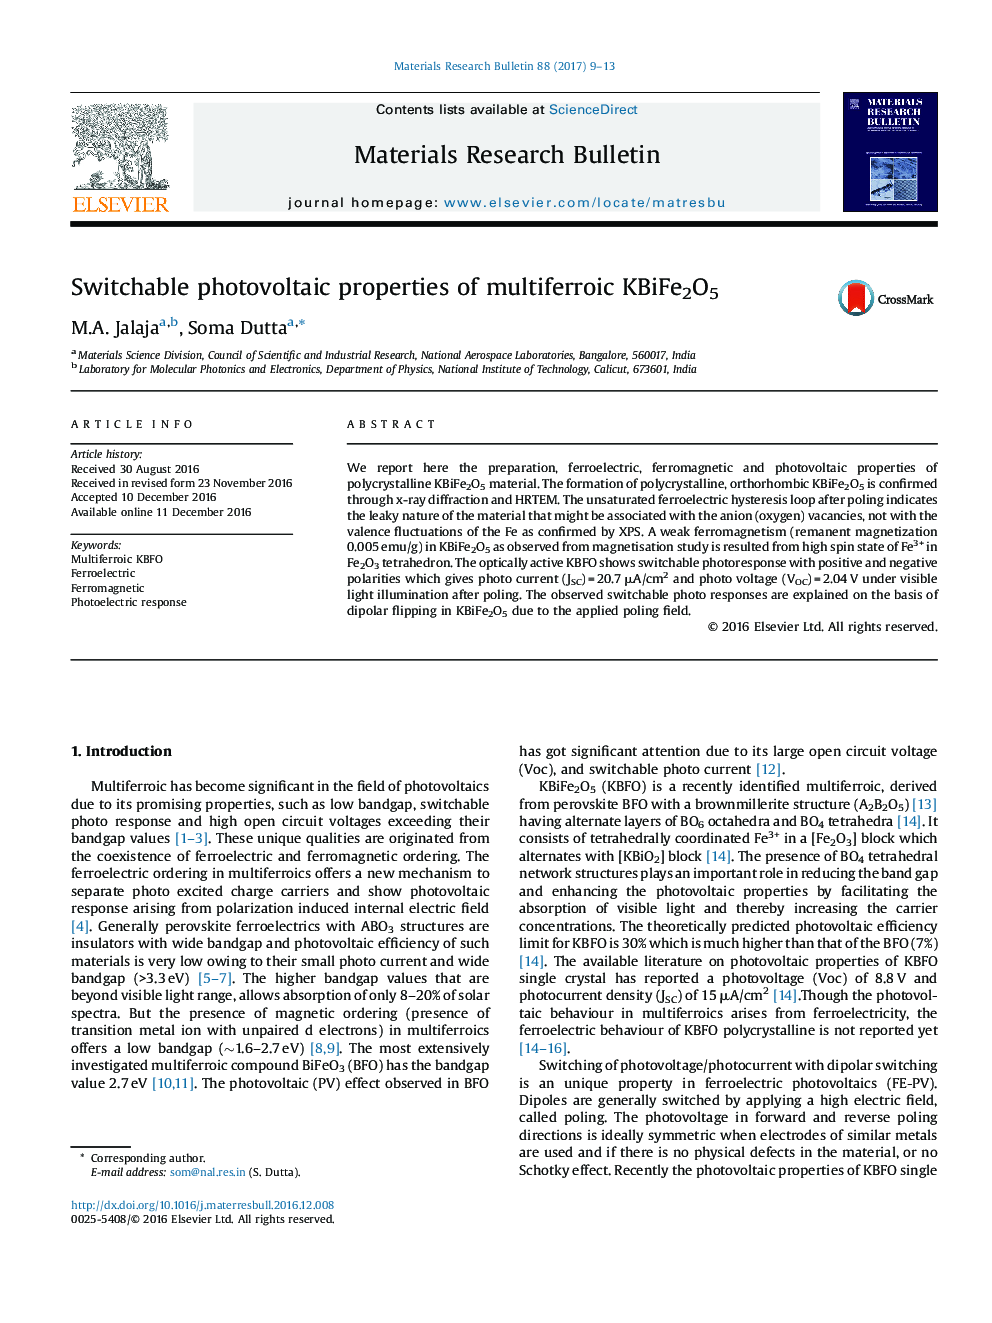 Switchable photovoltaic properties of multiferroic KBiFe2O5